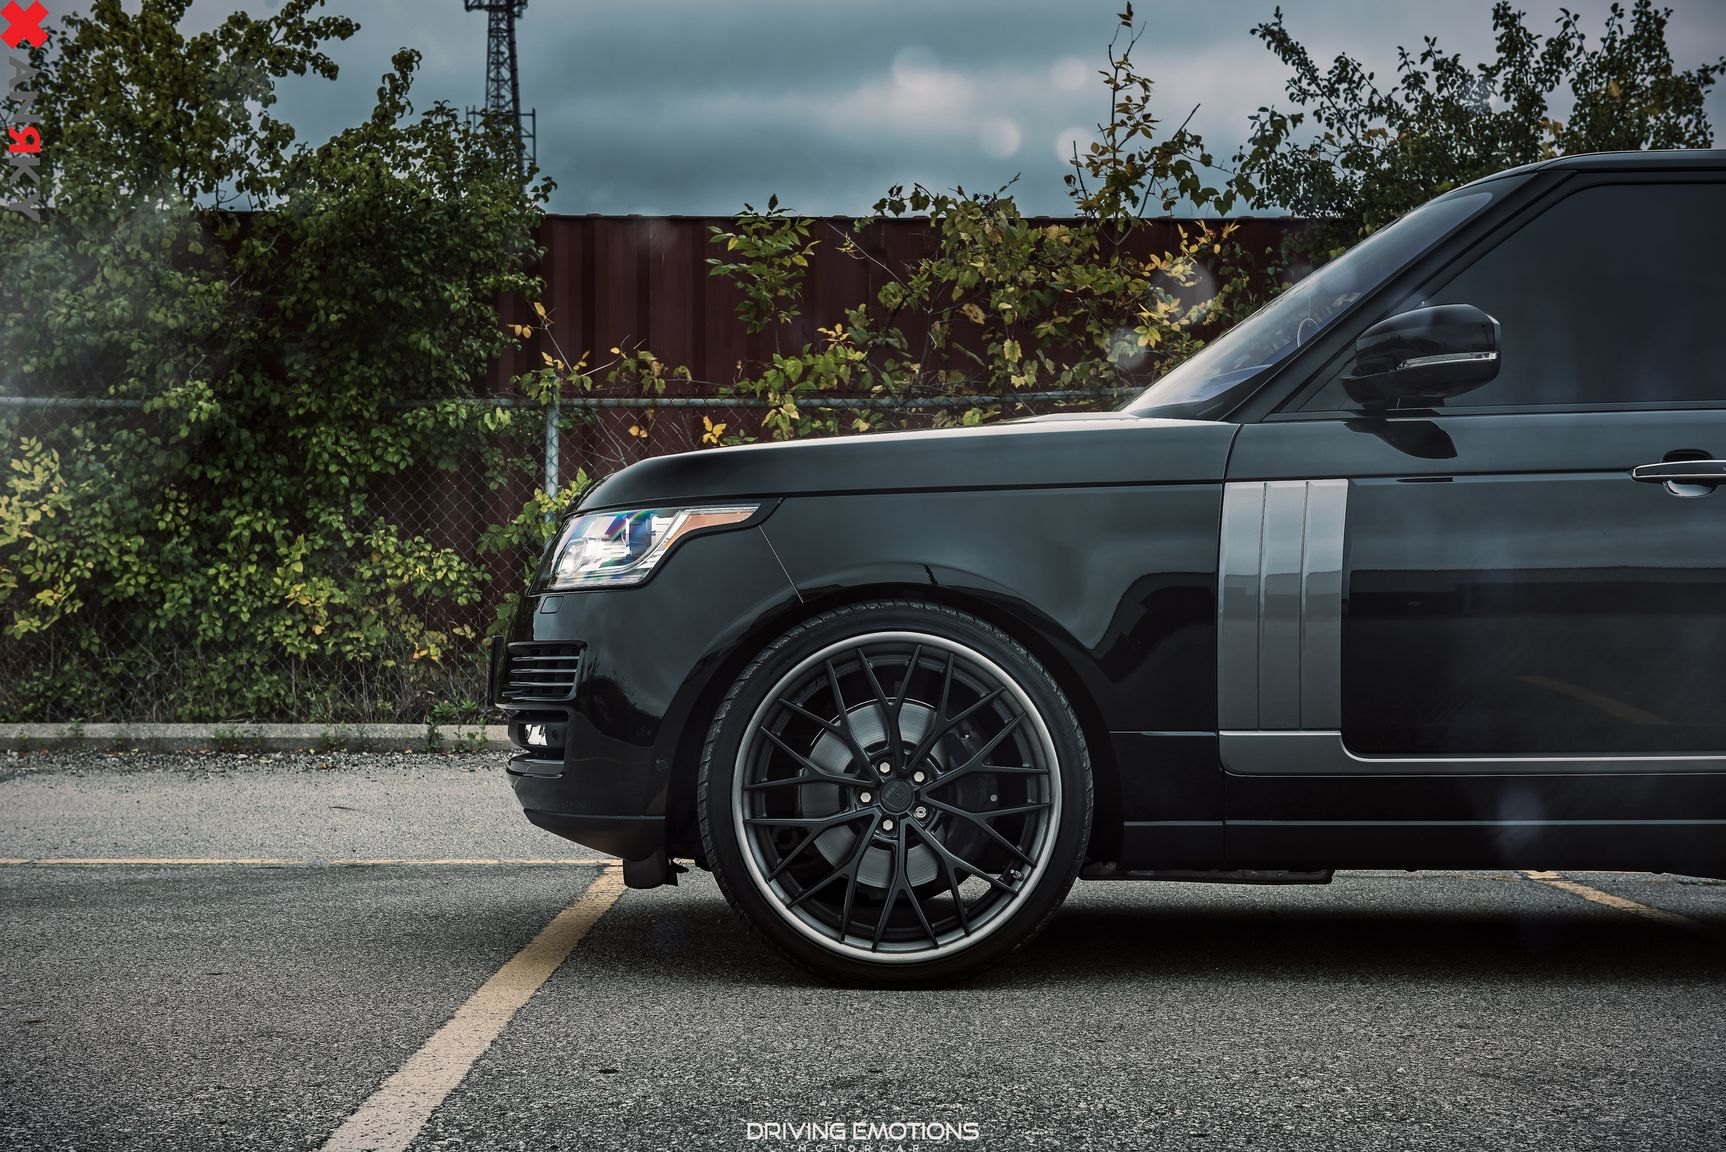 Satin Black Anrky Wheels on Custom Range Rover - Photo by Anrky Wheels